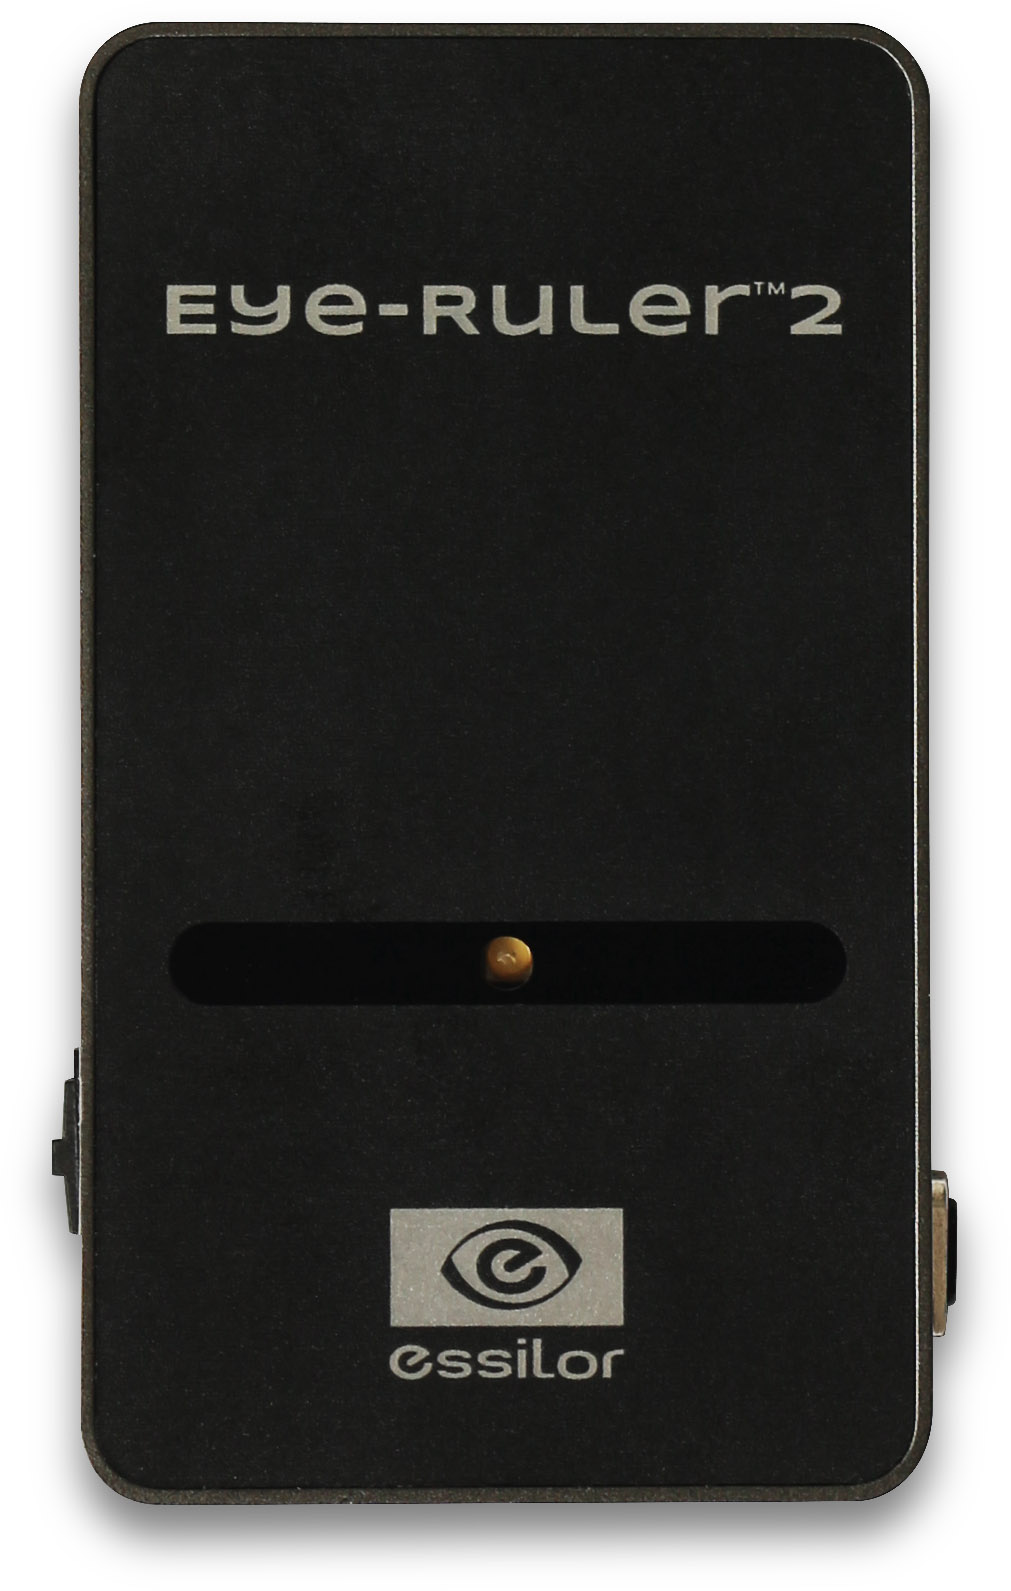 Eye-ruler 2